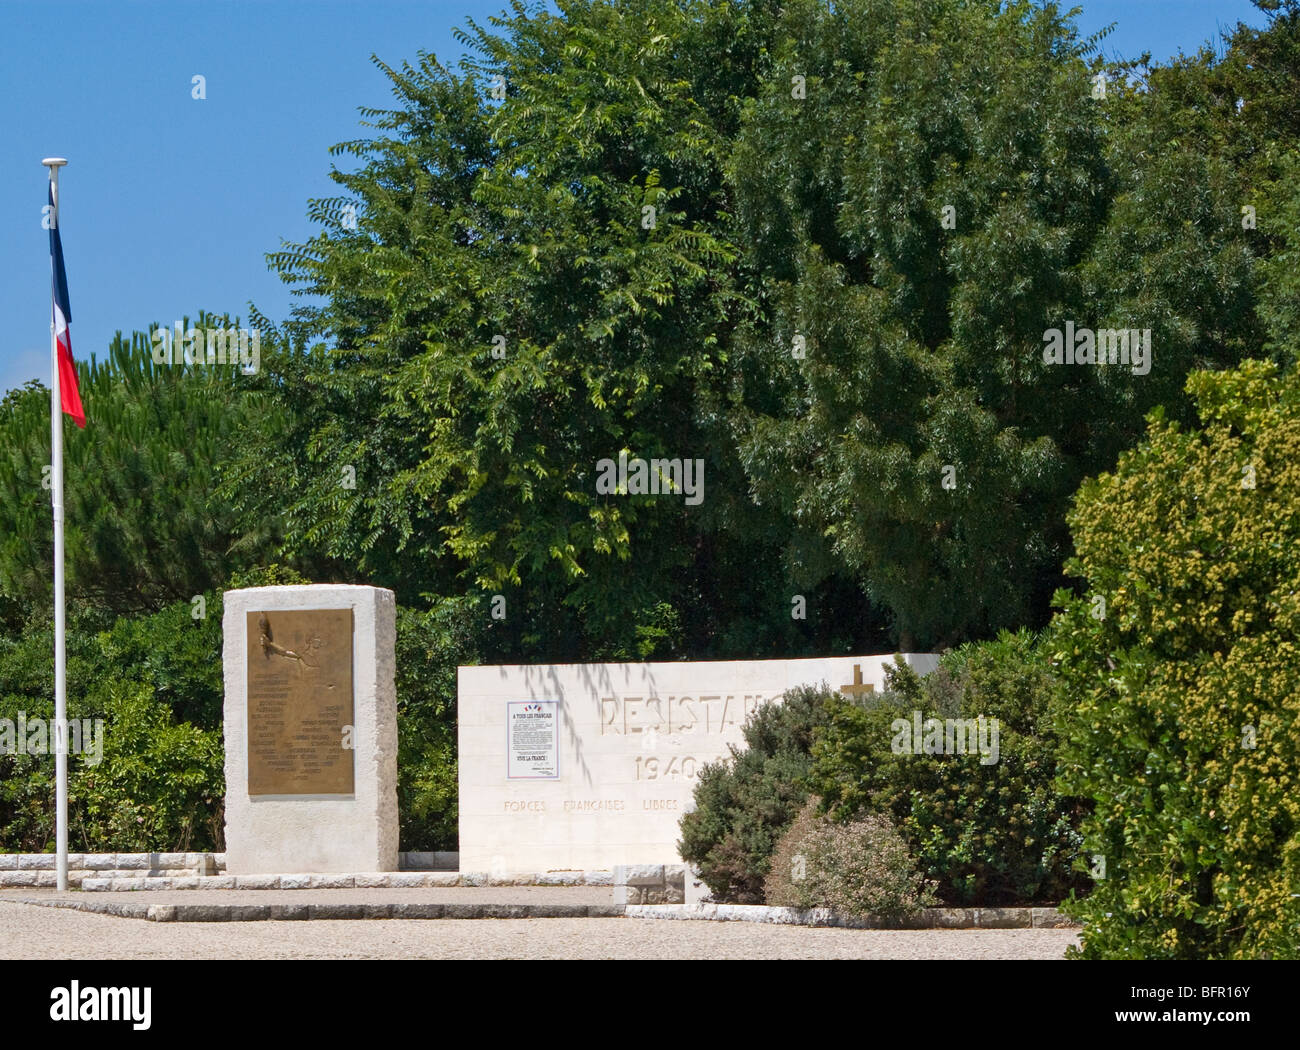 Resistance memorial La Rochelle Stock Photo